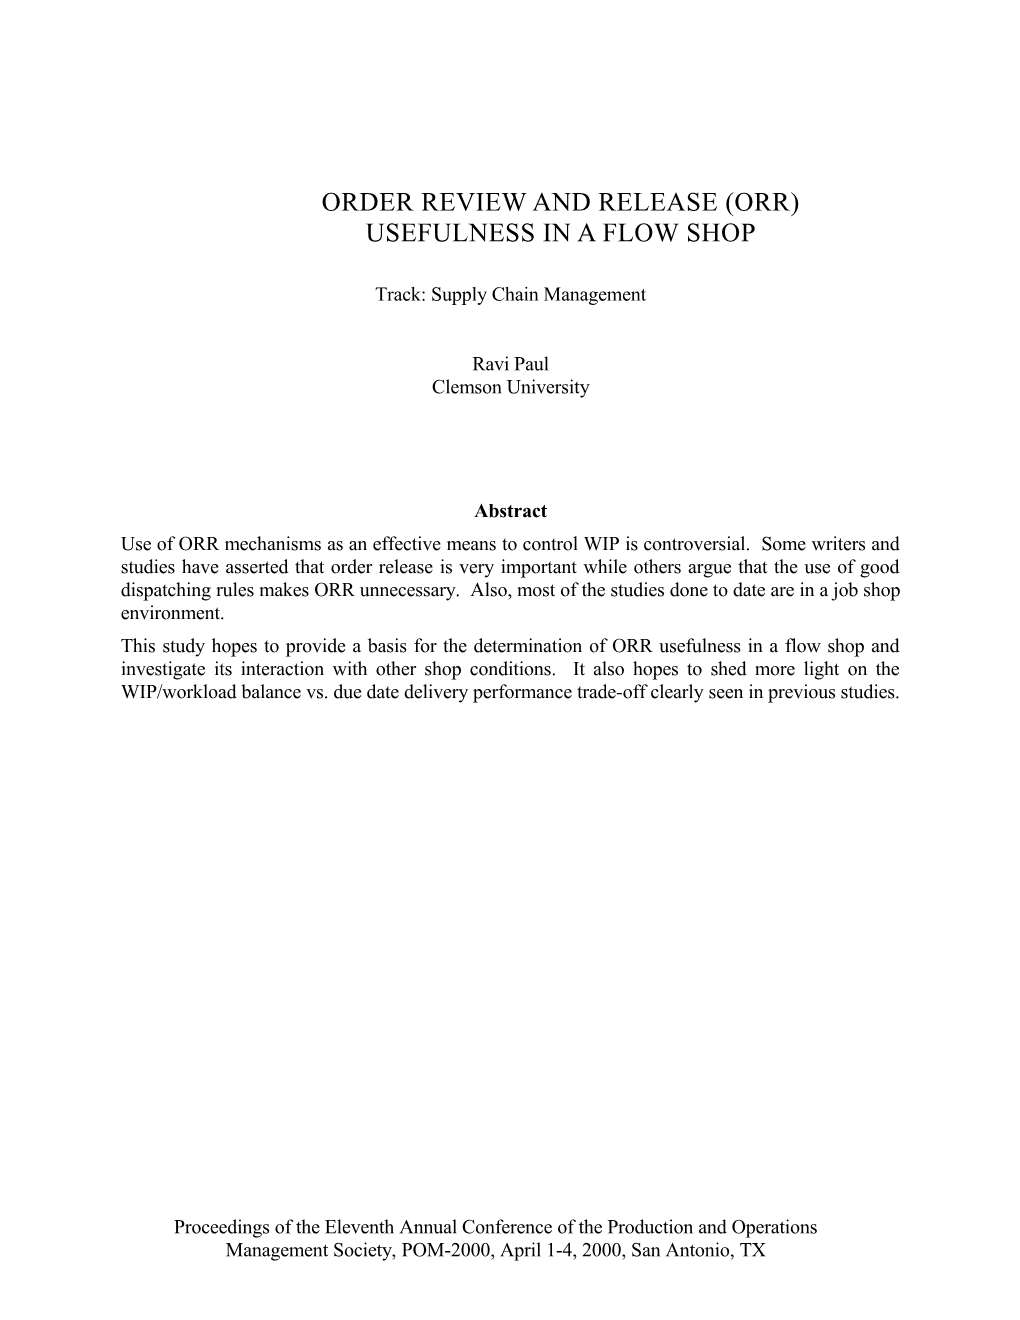 ORR Paper for POMS 2000 Proceedings